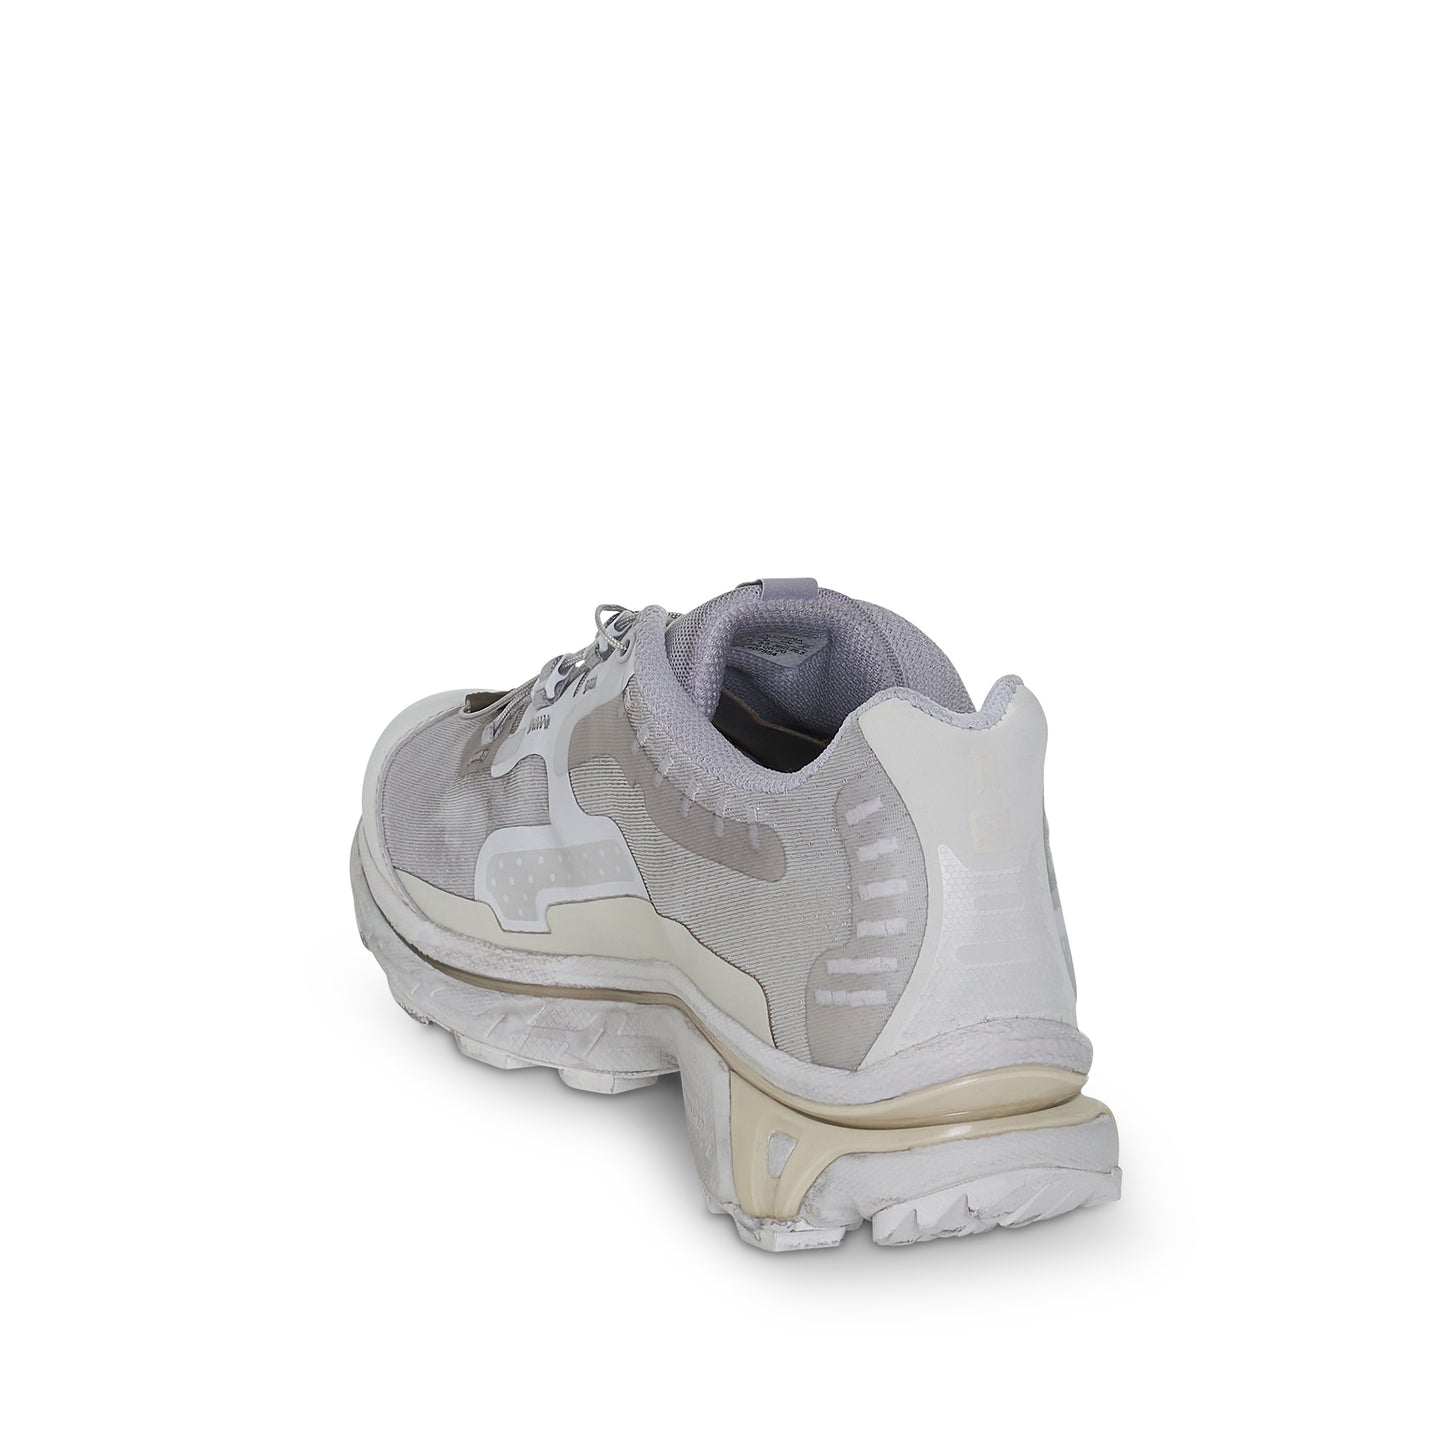 11BBS x Salomon Bamba 5 Dyed Sneaker in Ice Grey